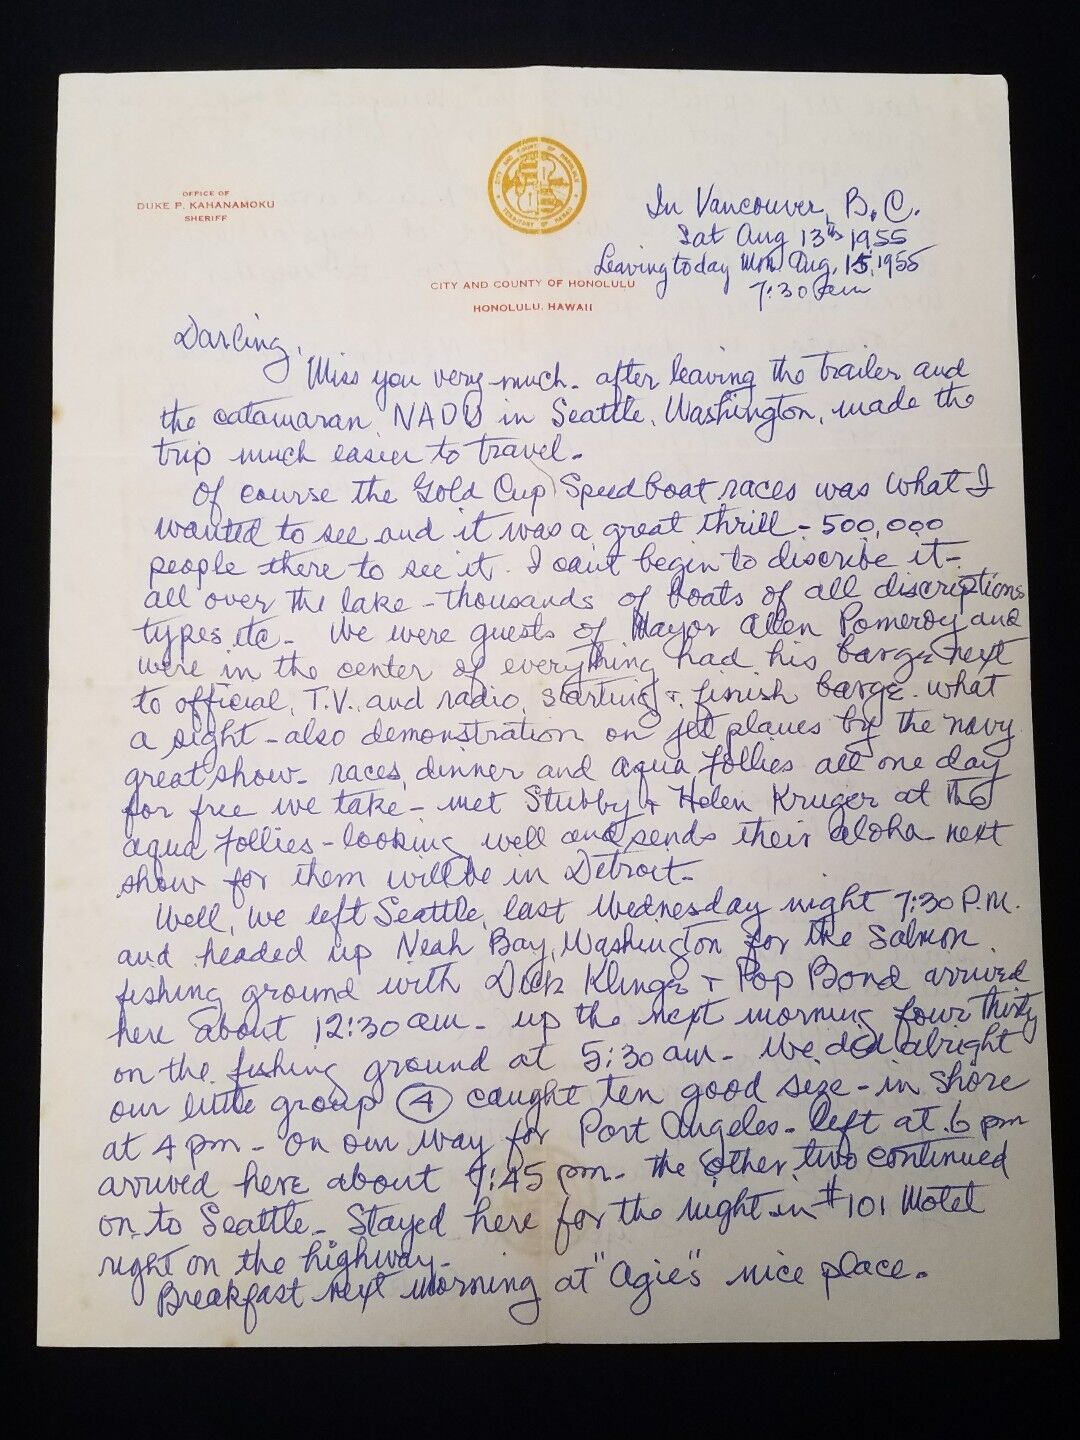  1955 Duke Kahanamoku letter to Nadine on Sheriff Letterhead Vancouver,B.C.